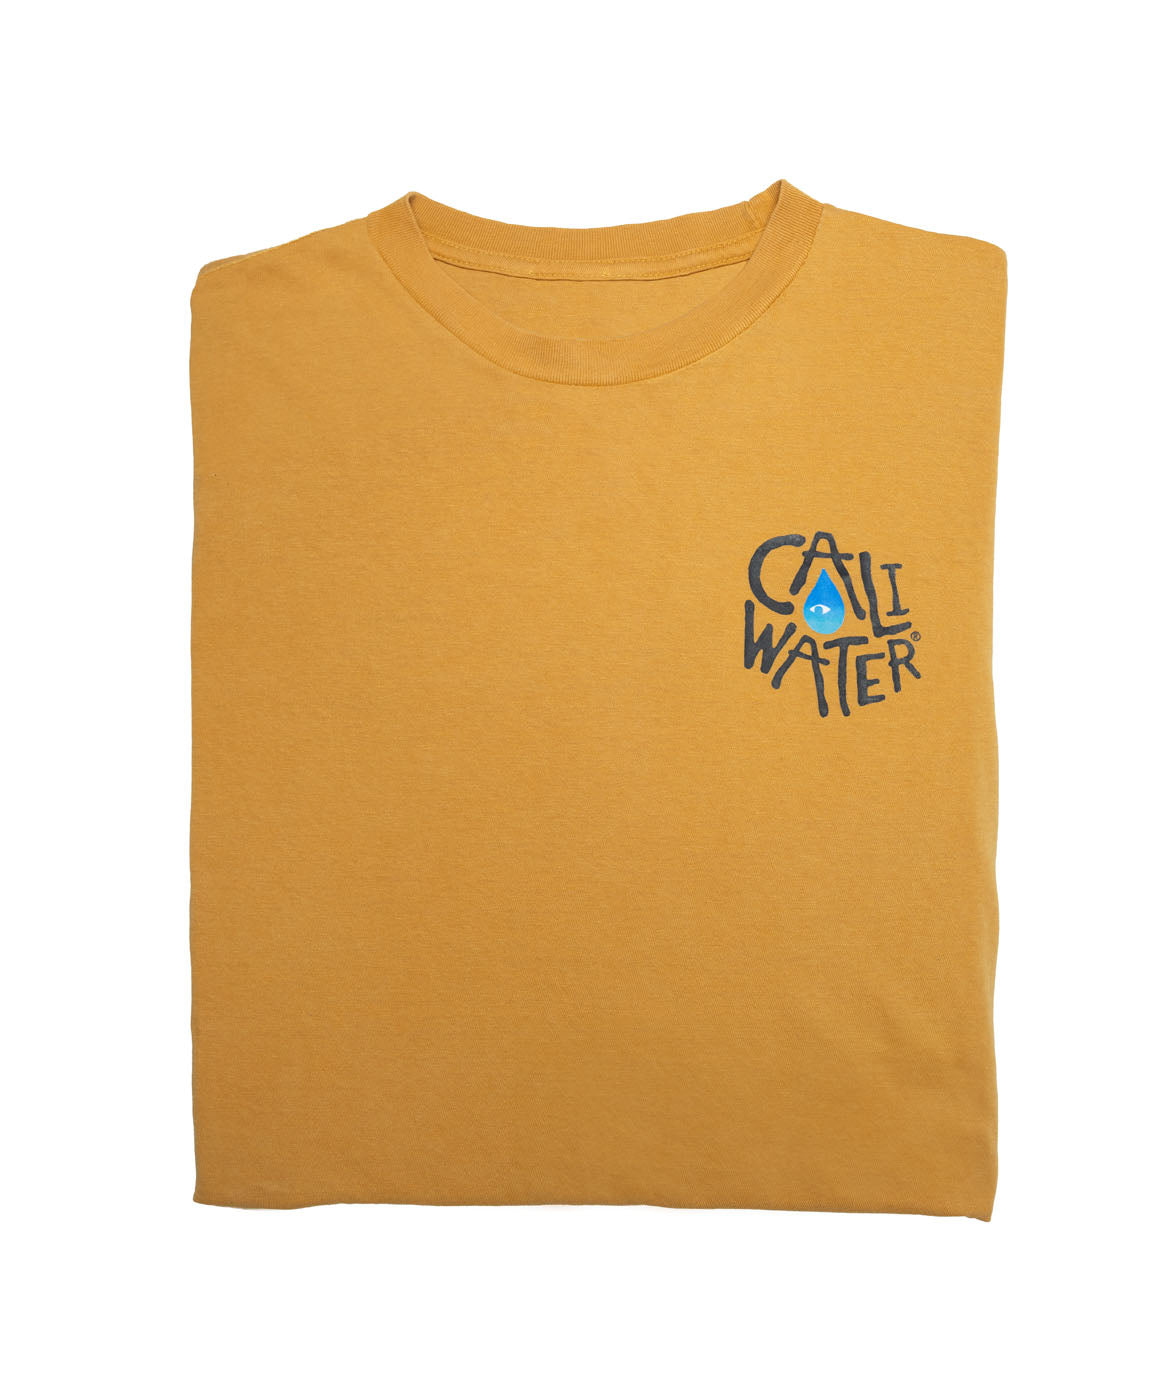 Caliwater Shirt